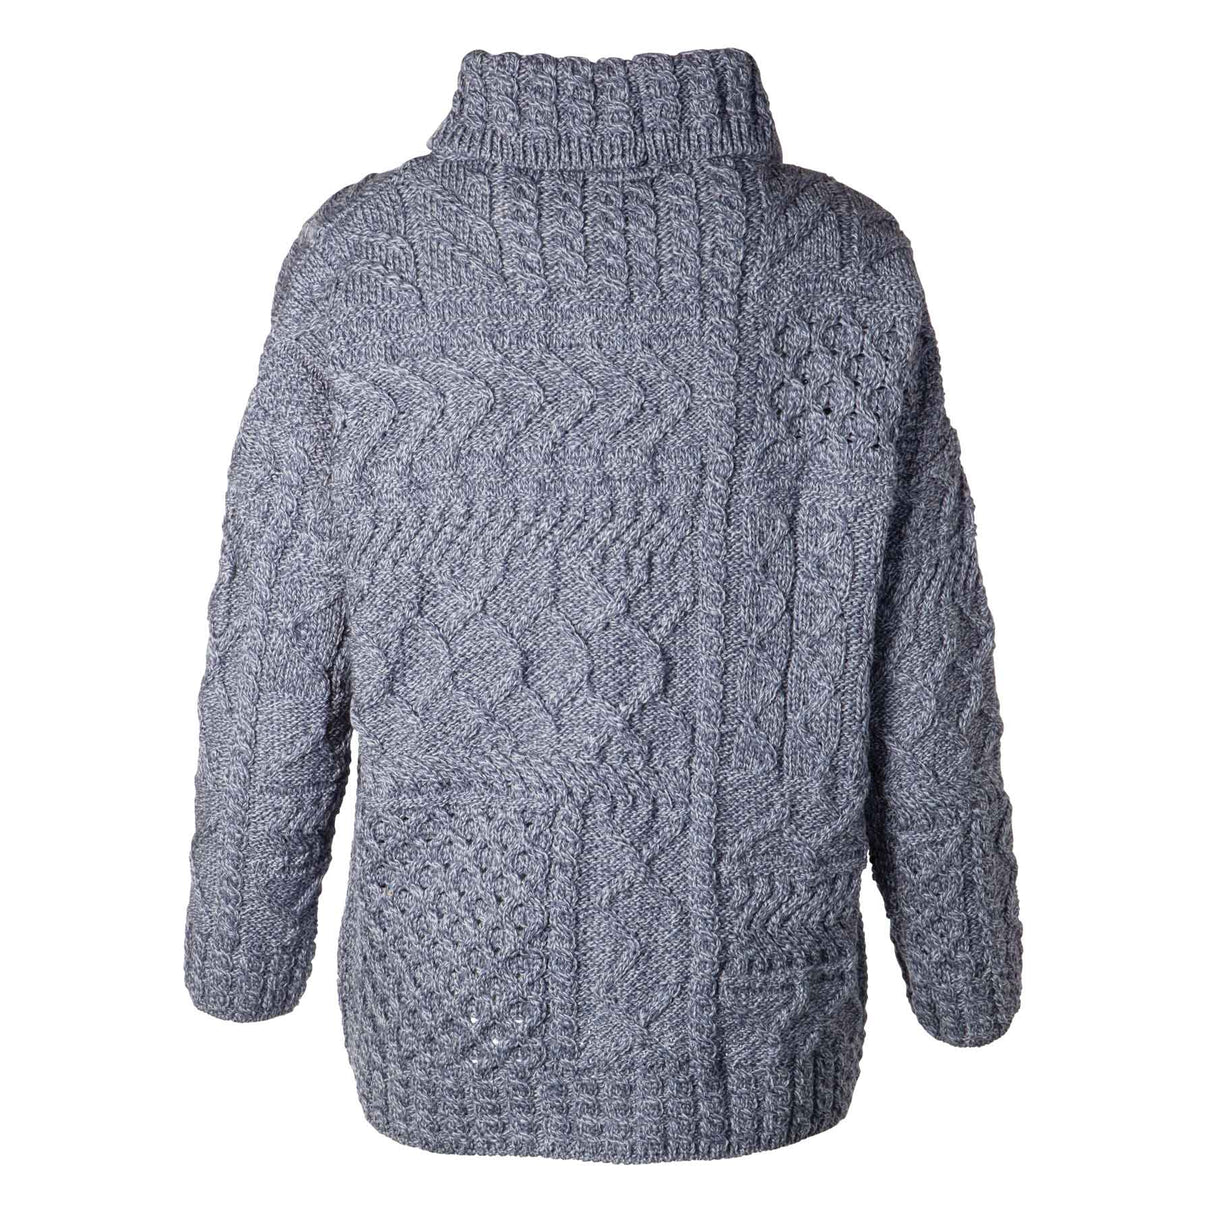 Oversized Patchwork Aran Knit Sweater, Denim Blue - Creative Irish Gifts